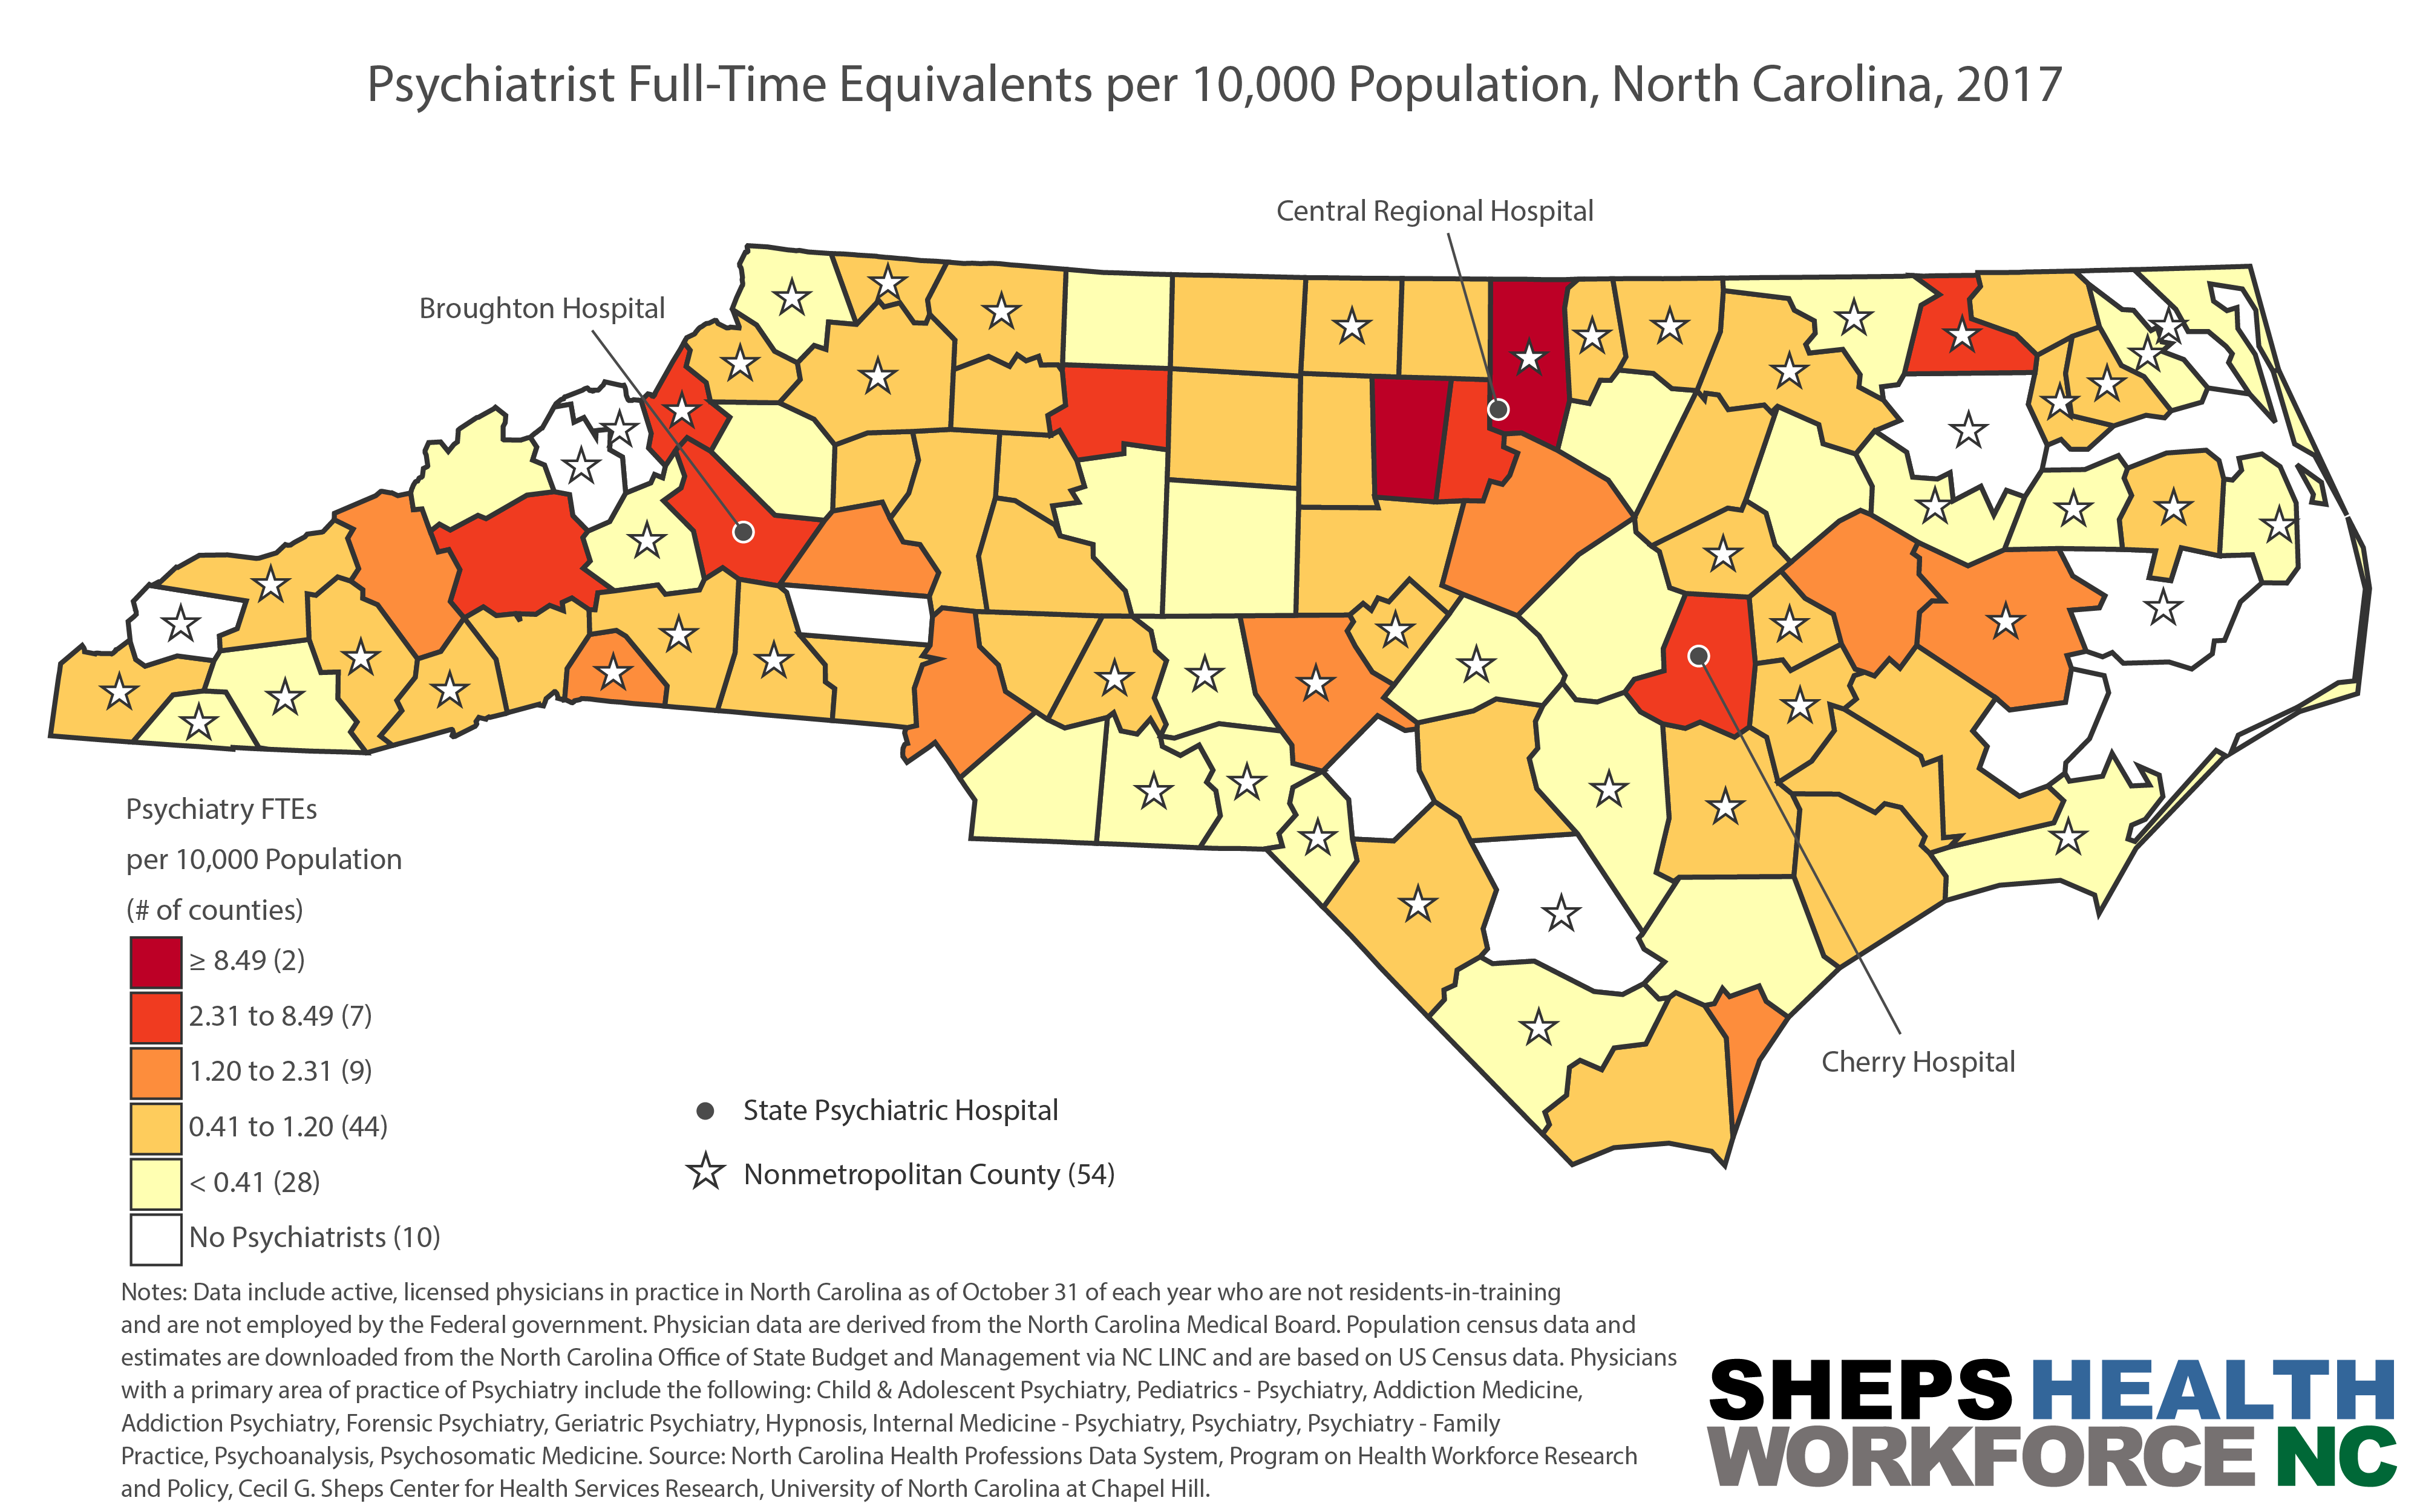 Psychiatrist Full-time Equivalents per 10,000 Population, North Carolina, 2017